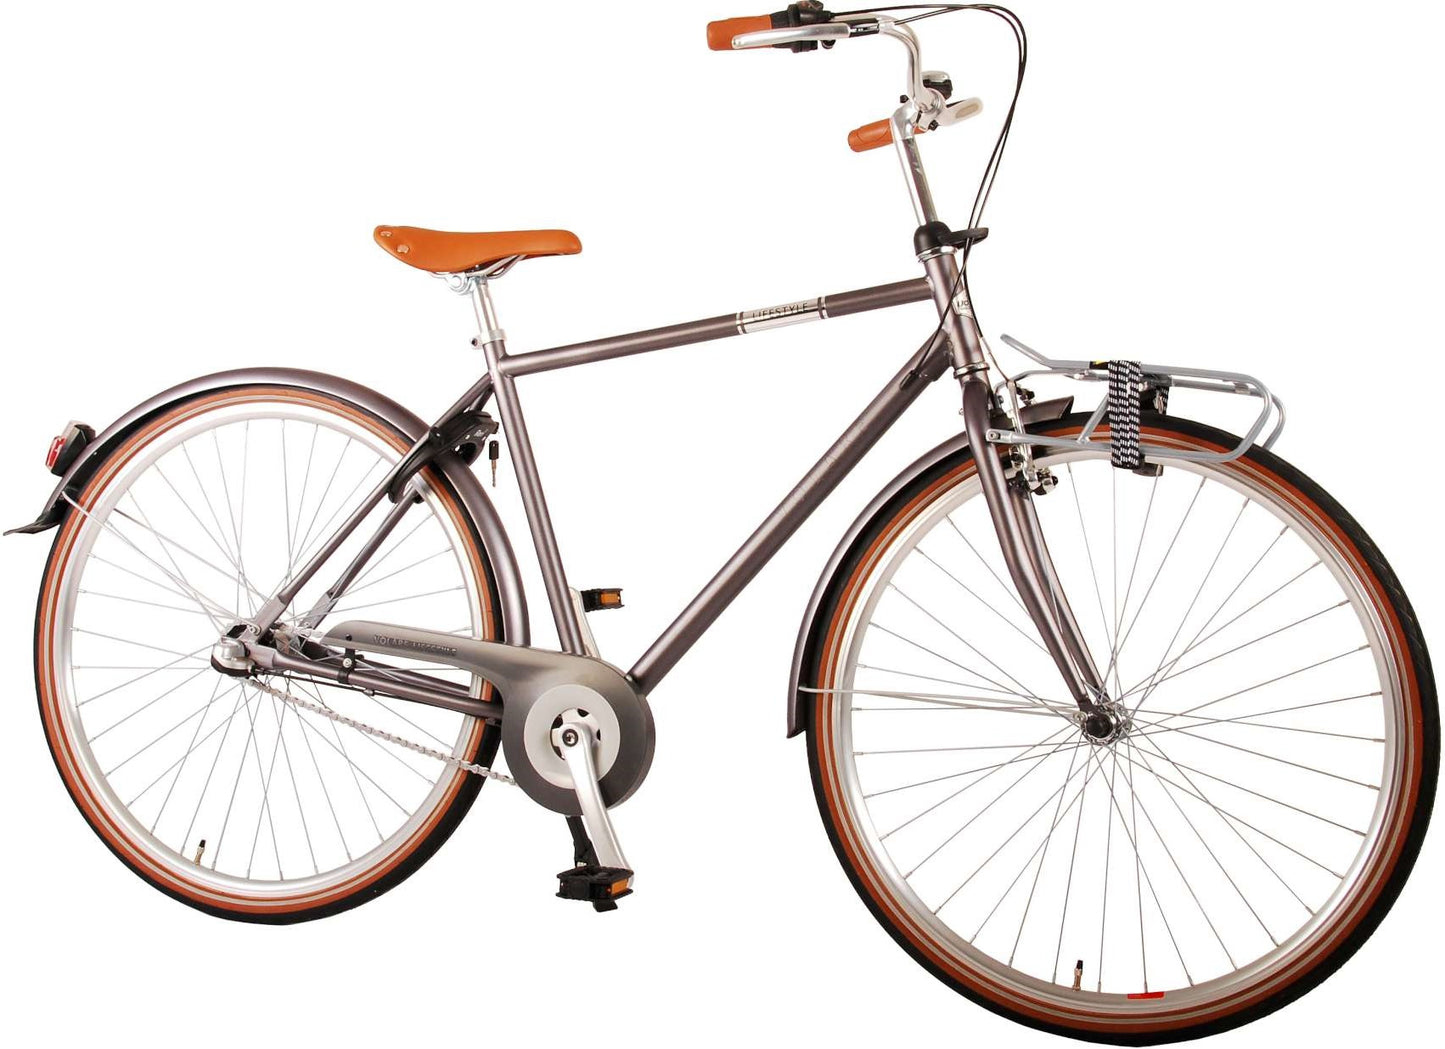 Volare Lifestyle Boy Bike Teen 48 cm de bajo sillín gris 3 engranajes